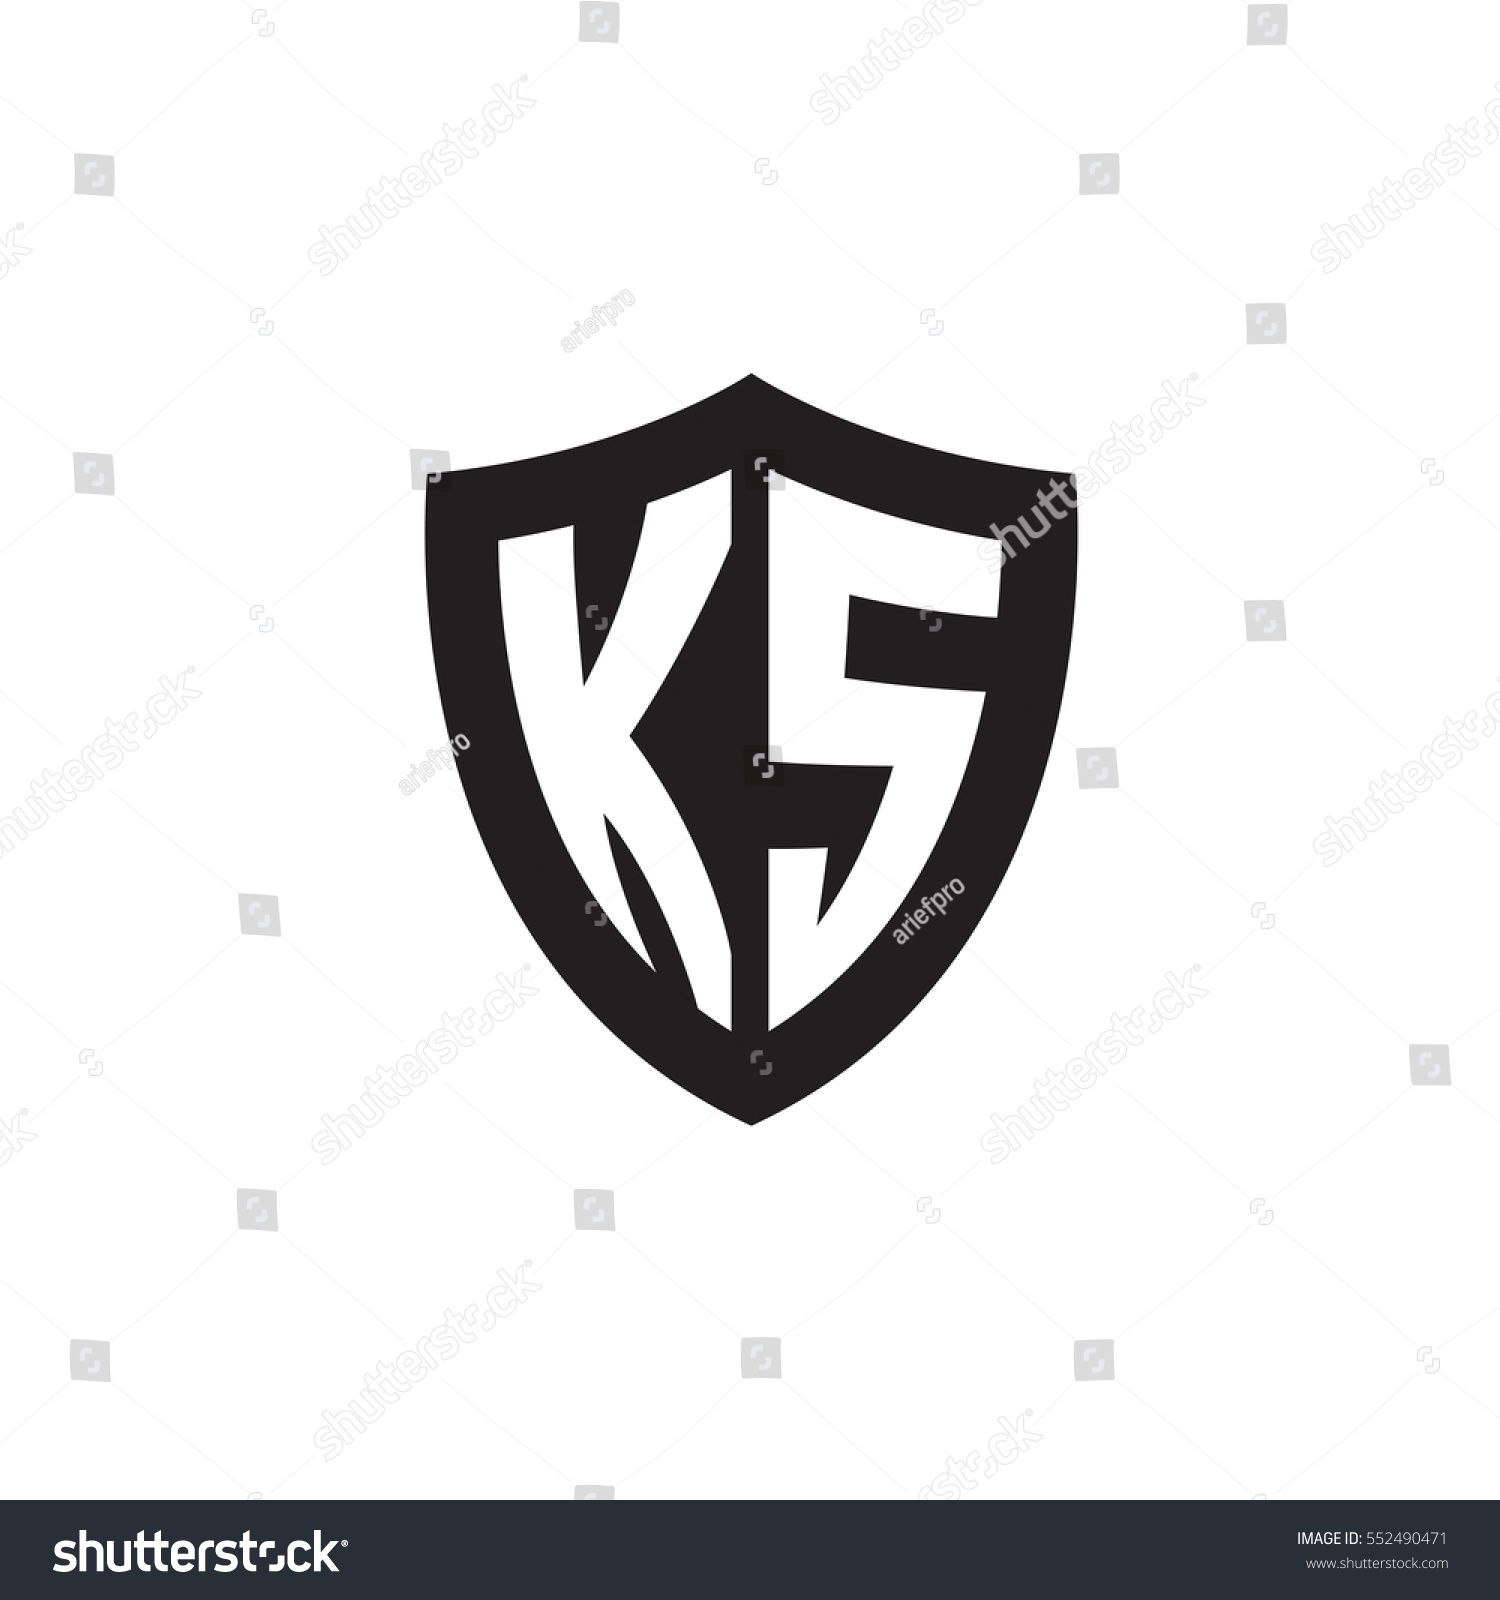 Initial Letters Ks Shield Shape Black Stock Vector 552490471 - Shutterstock